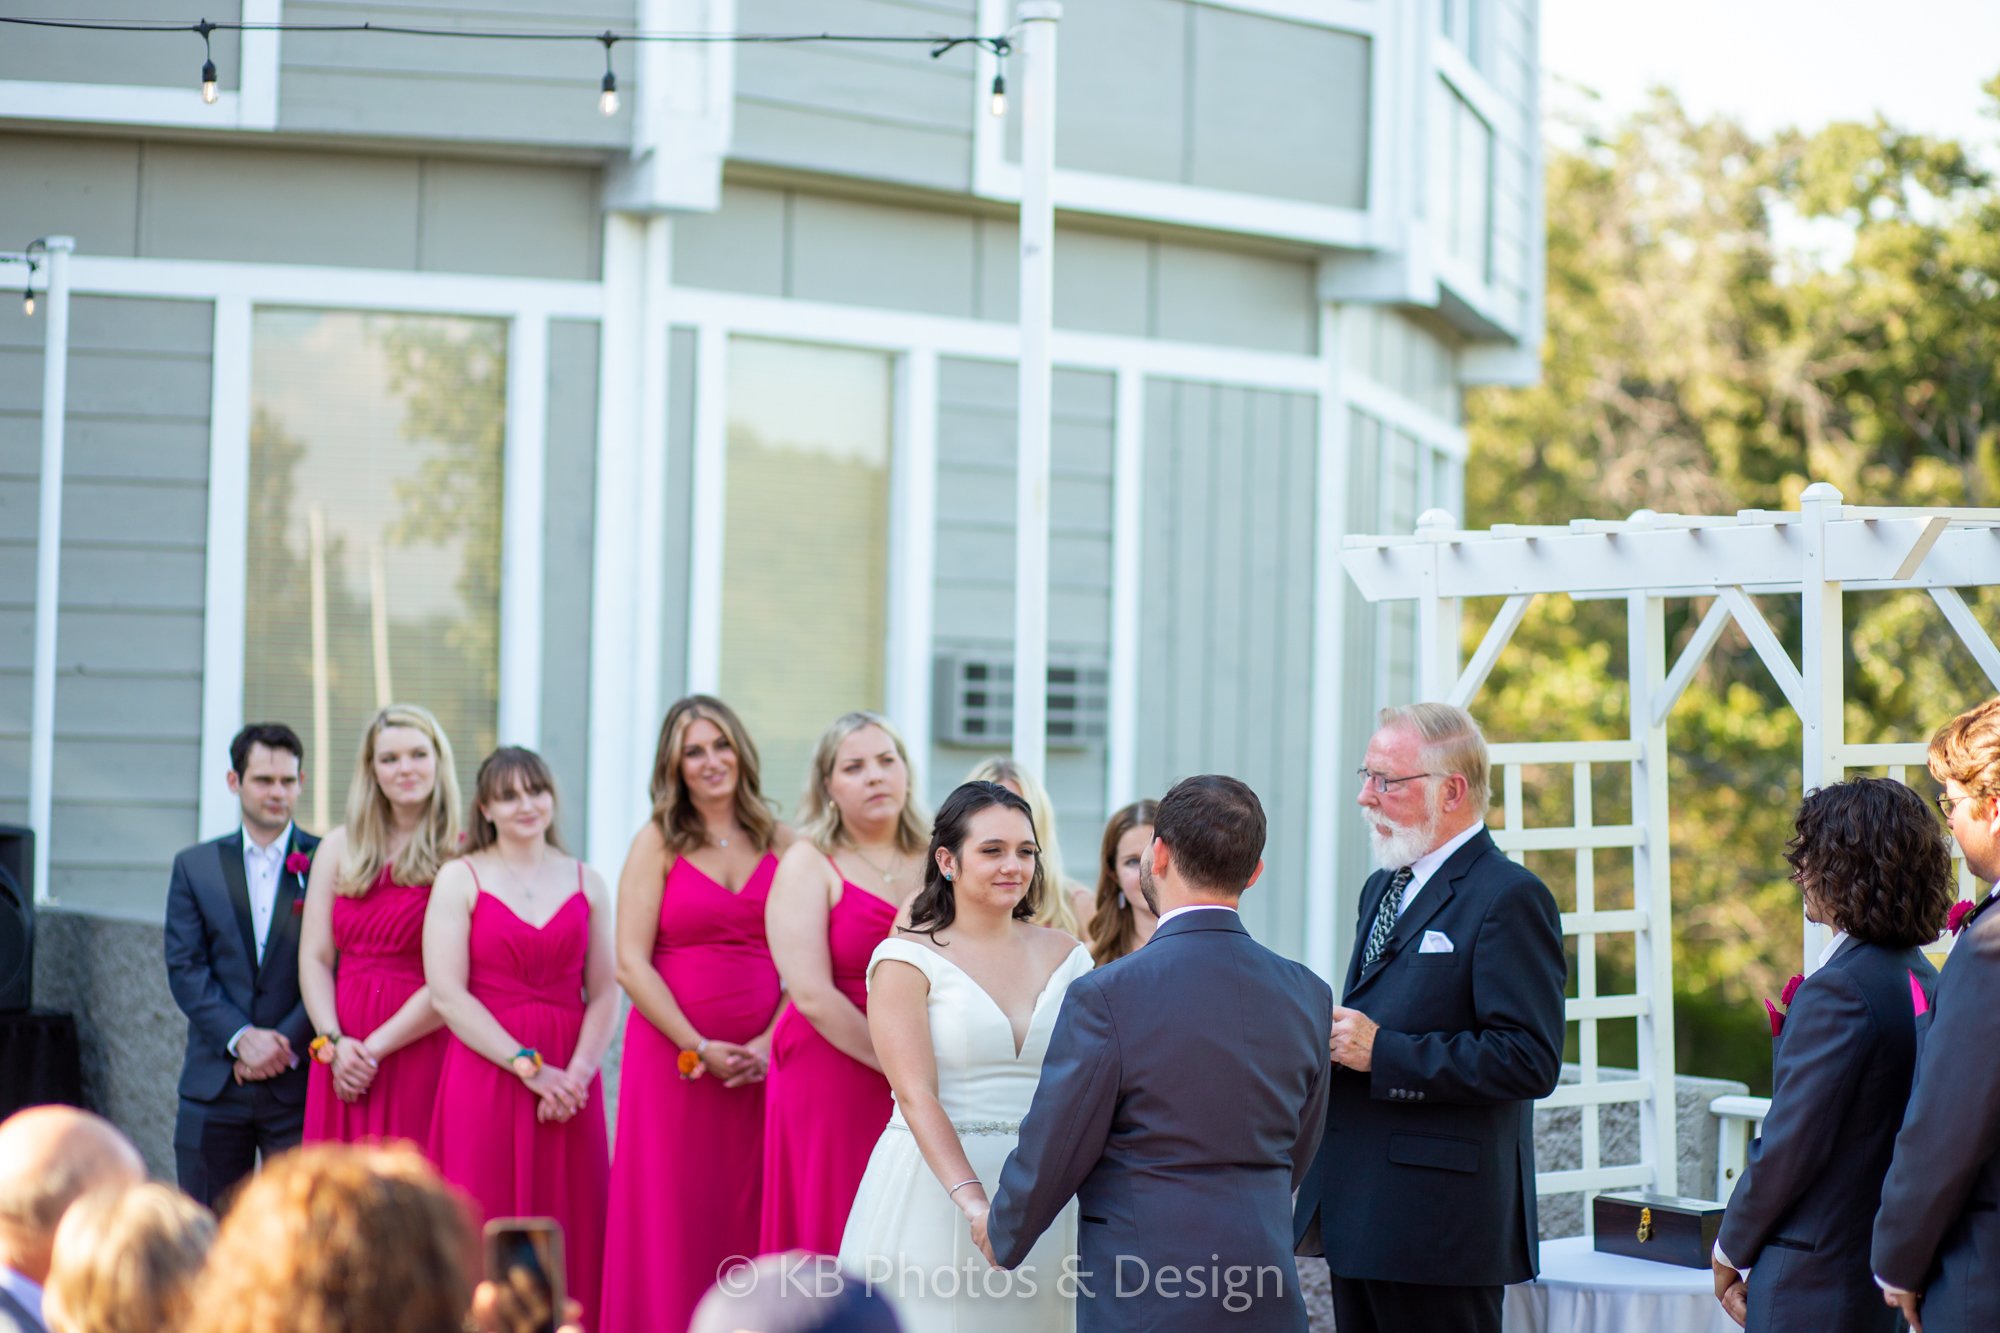 Wedding-Kirk-Darby-Lake-of-the-Ozarks-Margaritaville-Missouri-Jefferson-City-wedding-photos-KB-Photos-and-Design-380.jpg